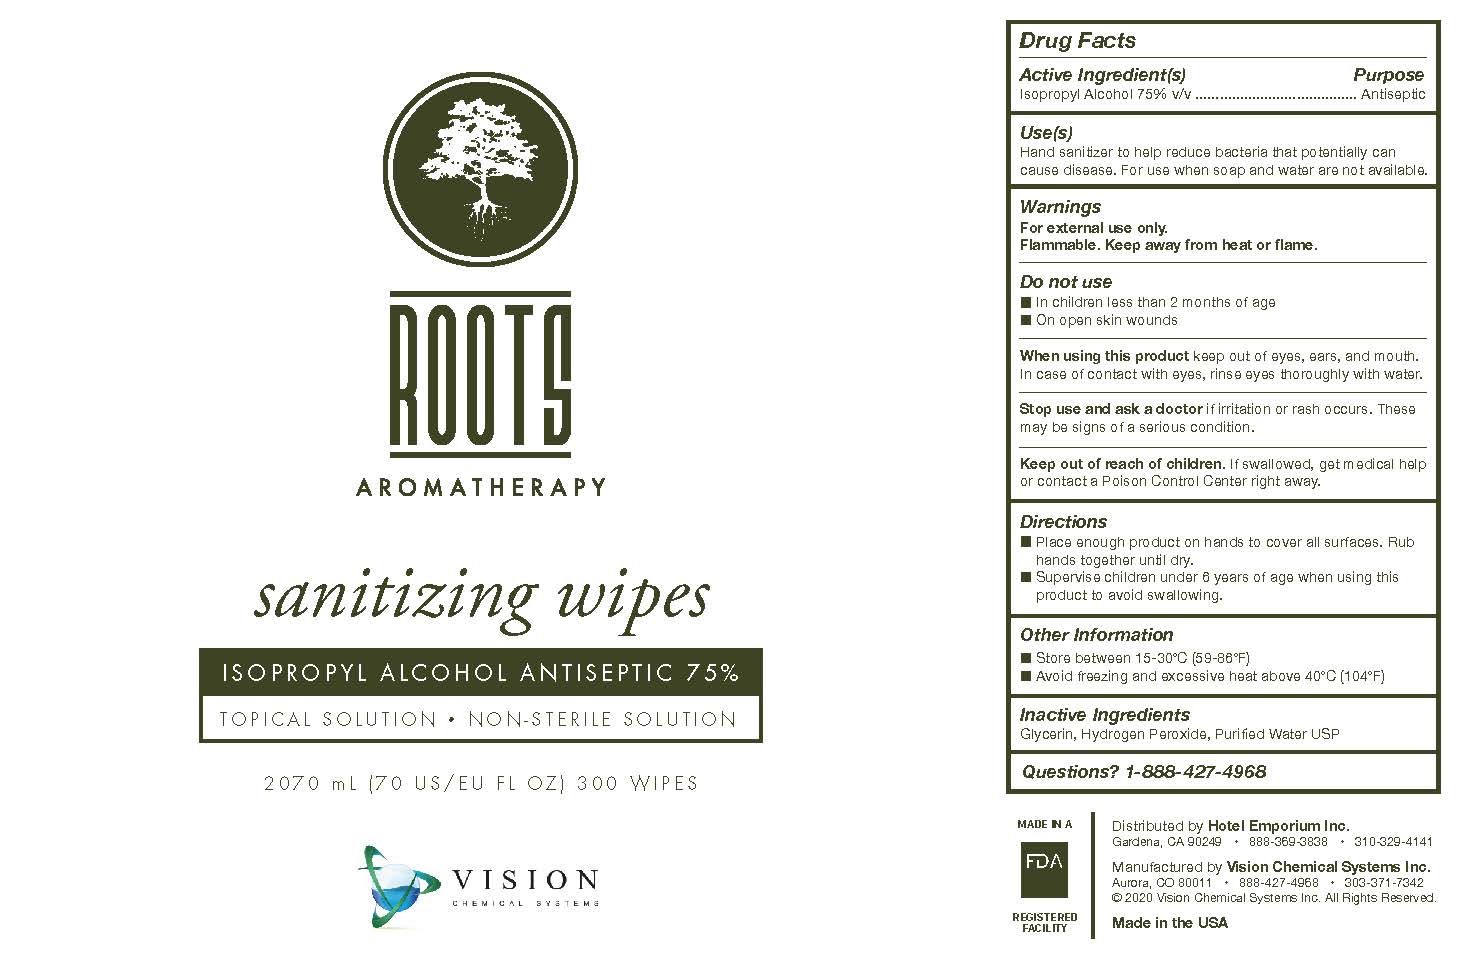 Roots Aromatherapy Sanitizing Wipes